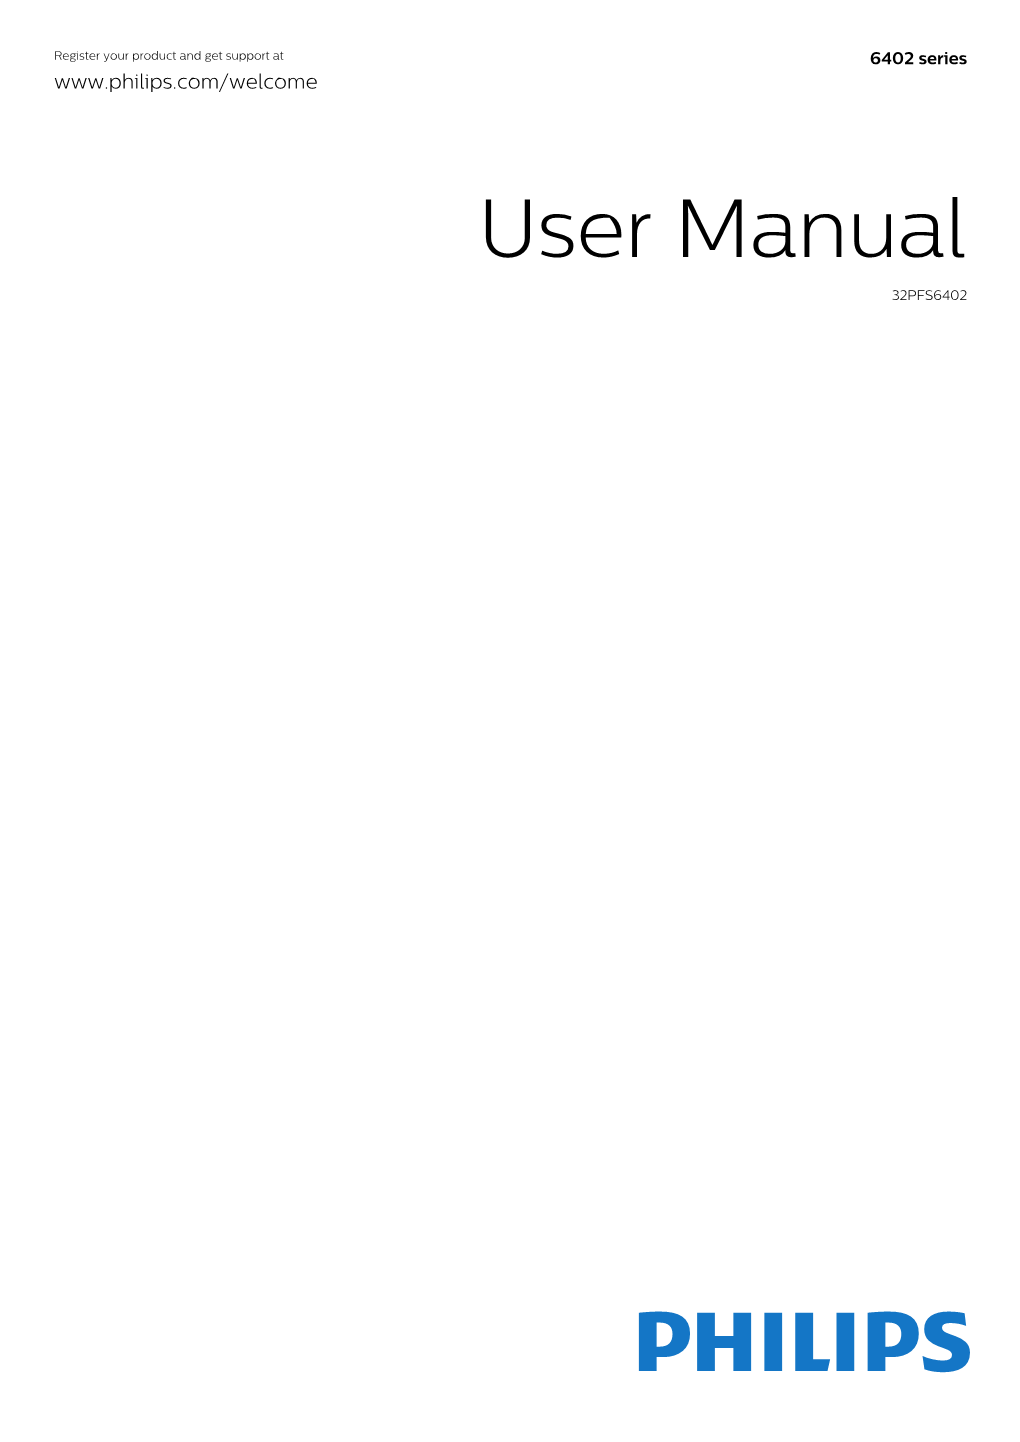 User Manual 32PFS6402 Contents